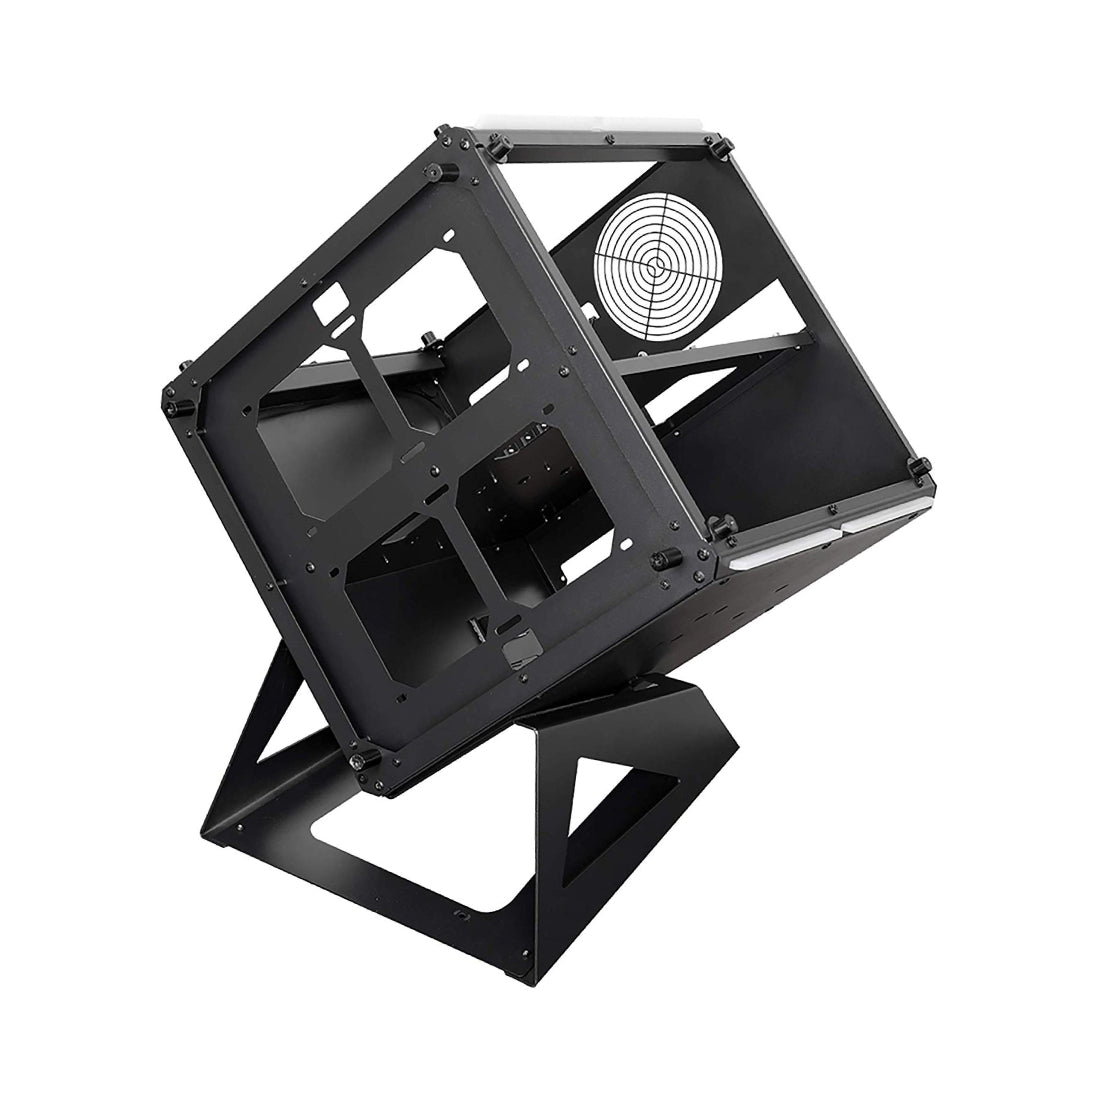 Azza Cube 802F ATX Mid Tower Case - صندوق - Store 974 | ستور ٩٧٤